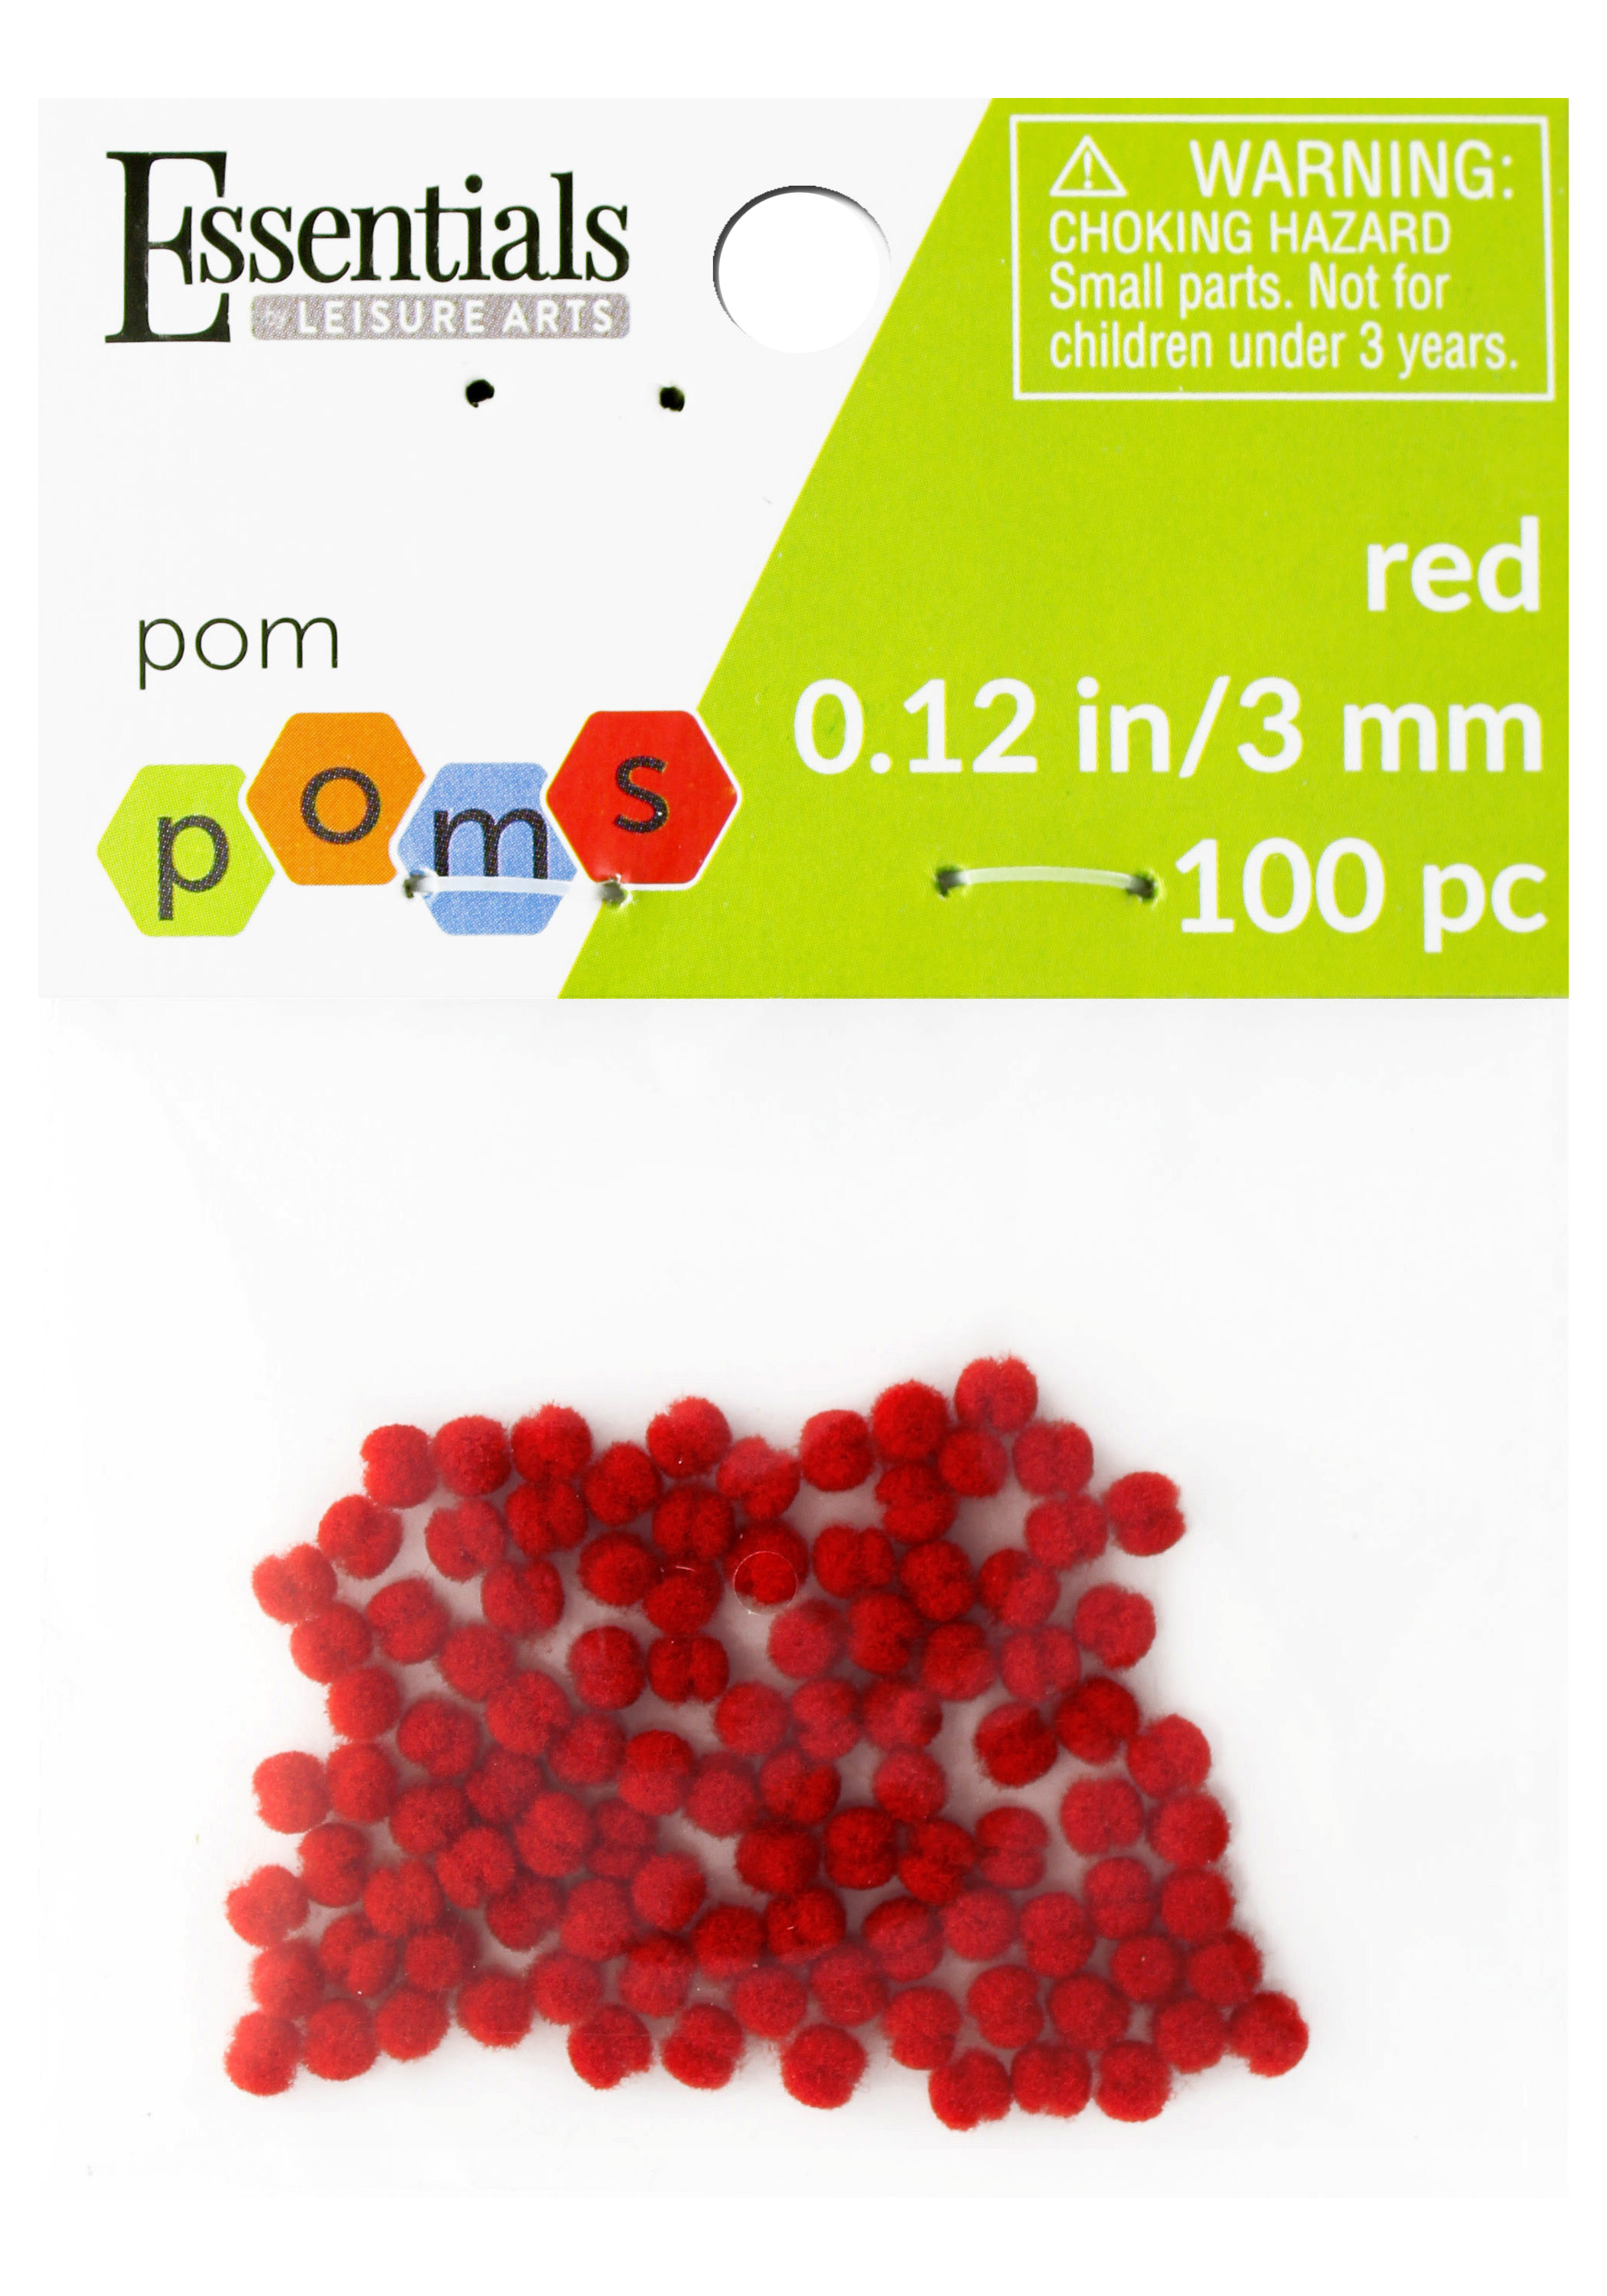 Essentials by Leisure Arts Pom Poms - Red - 3mm - 100 piece pom